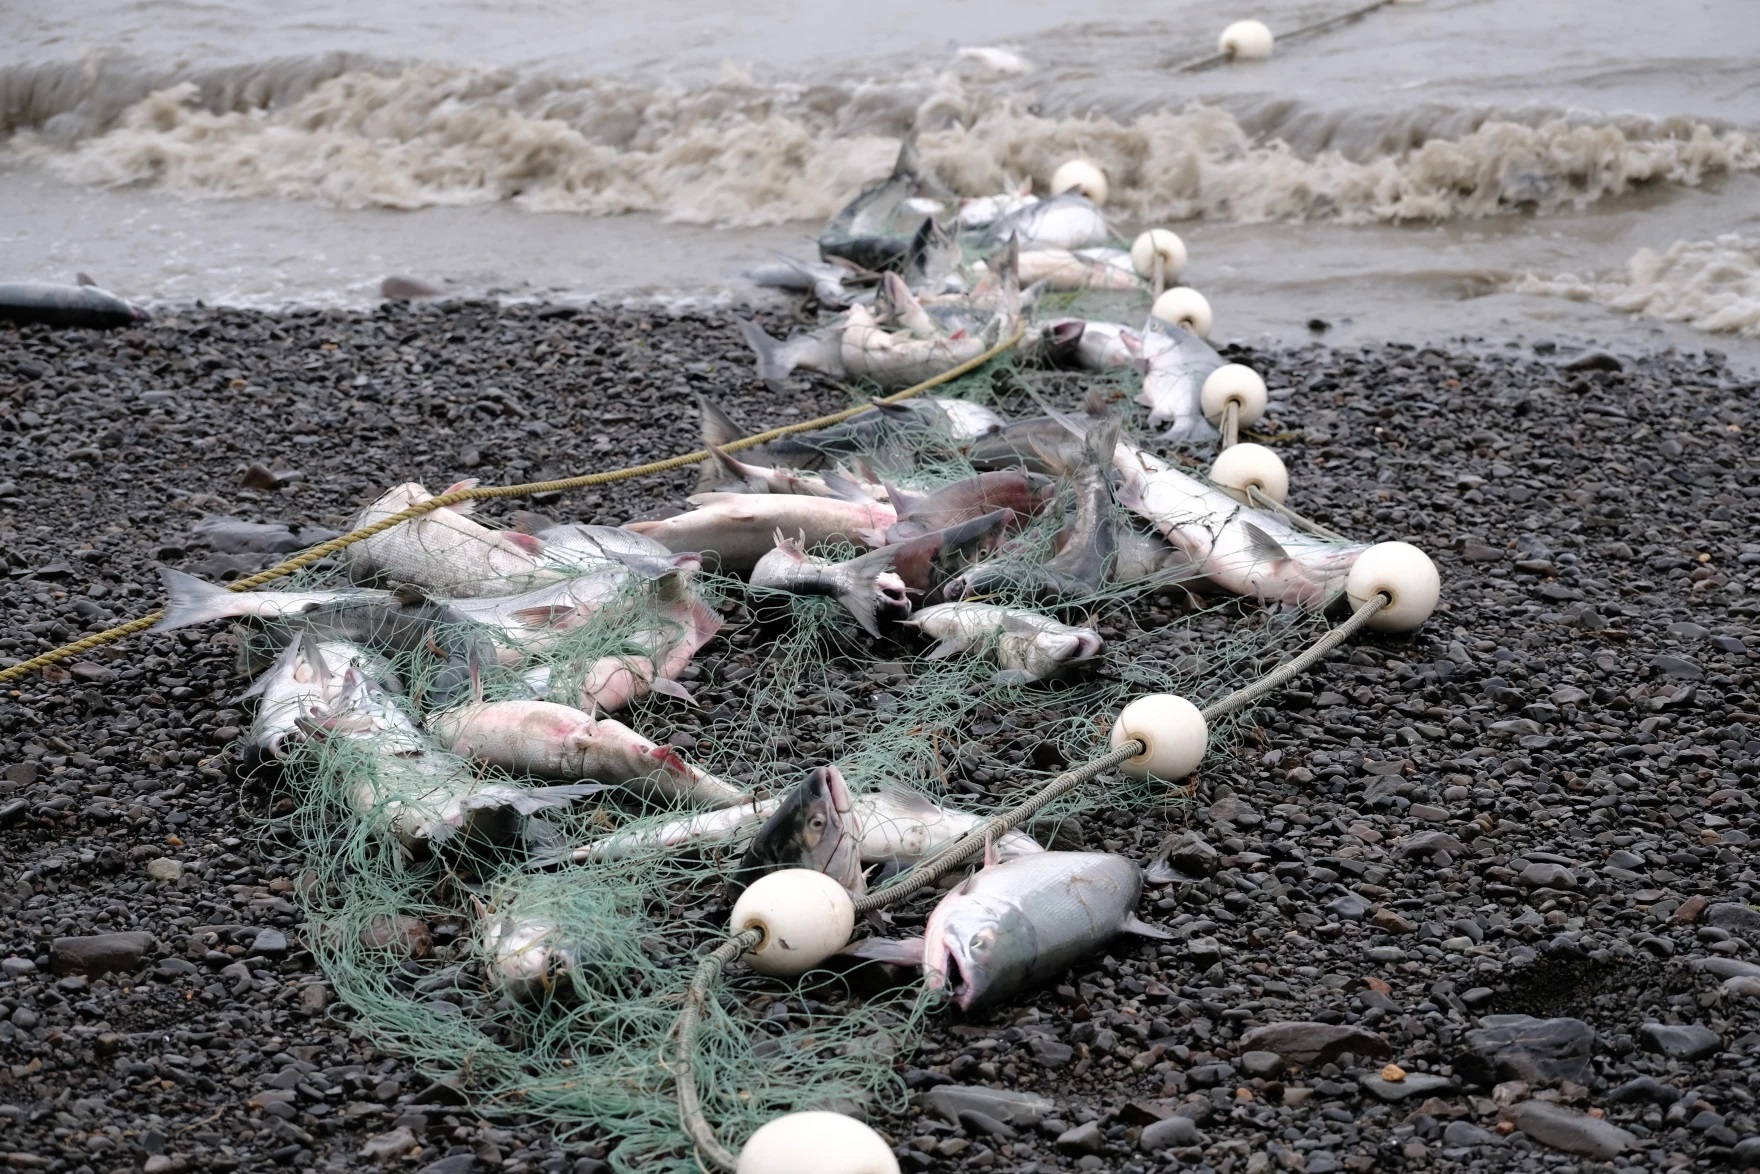 Bristol Bay tribe forms recycling program for fish nets, rain gear